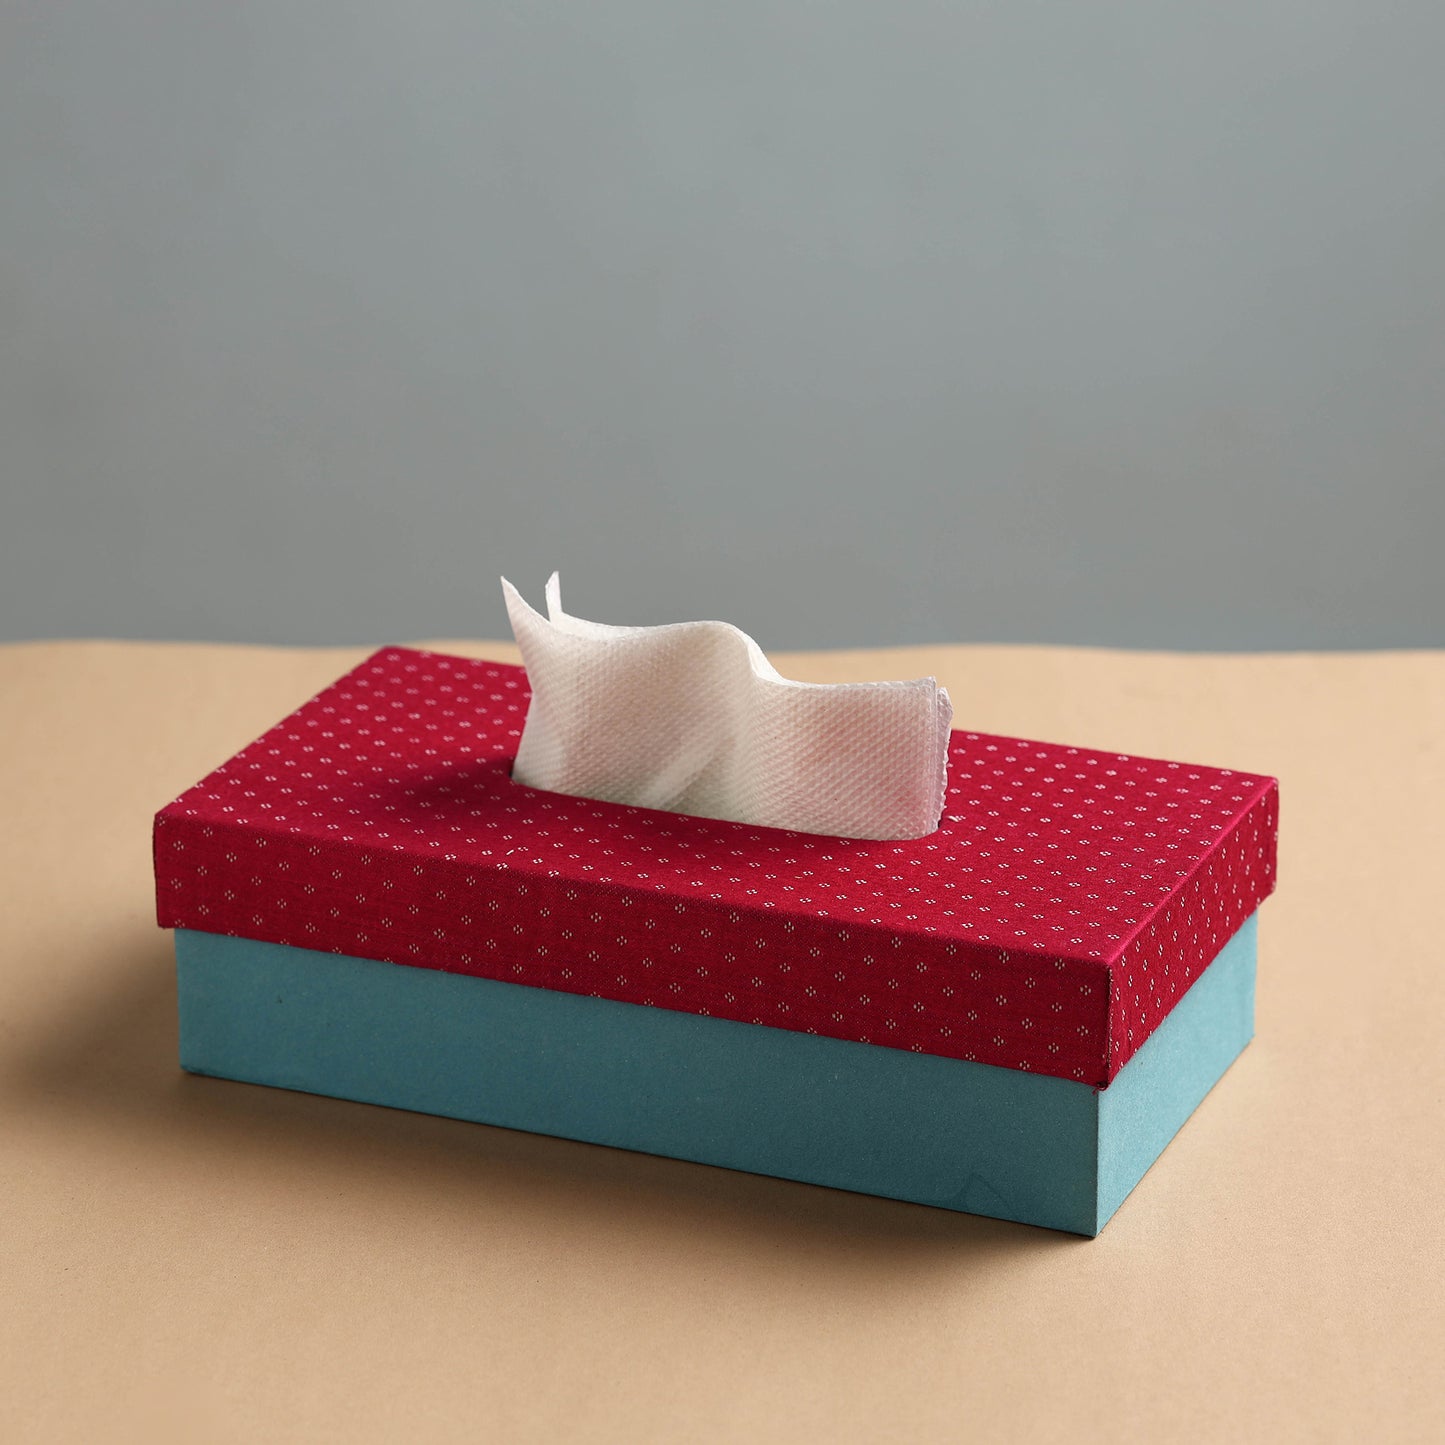 Handmade Tissue Box
